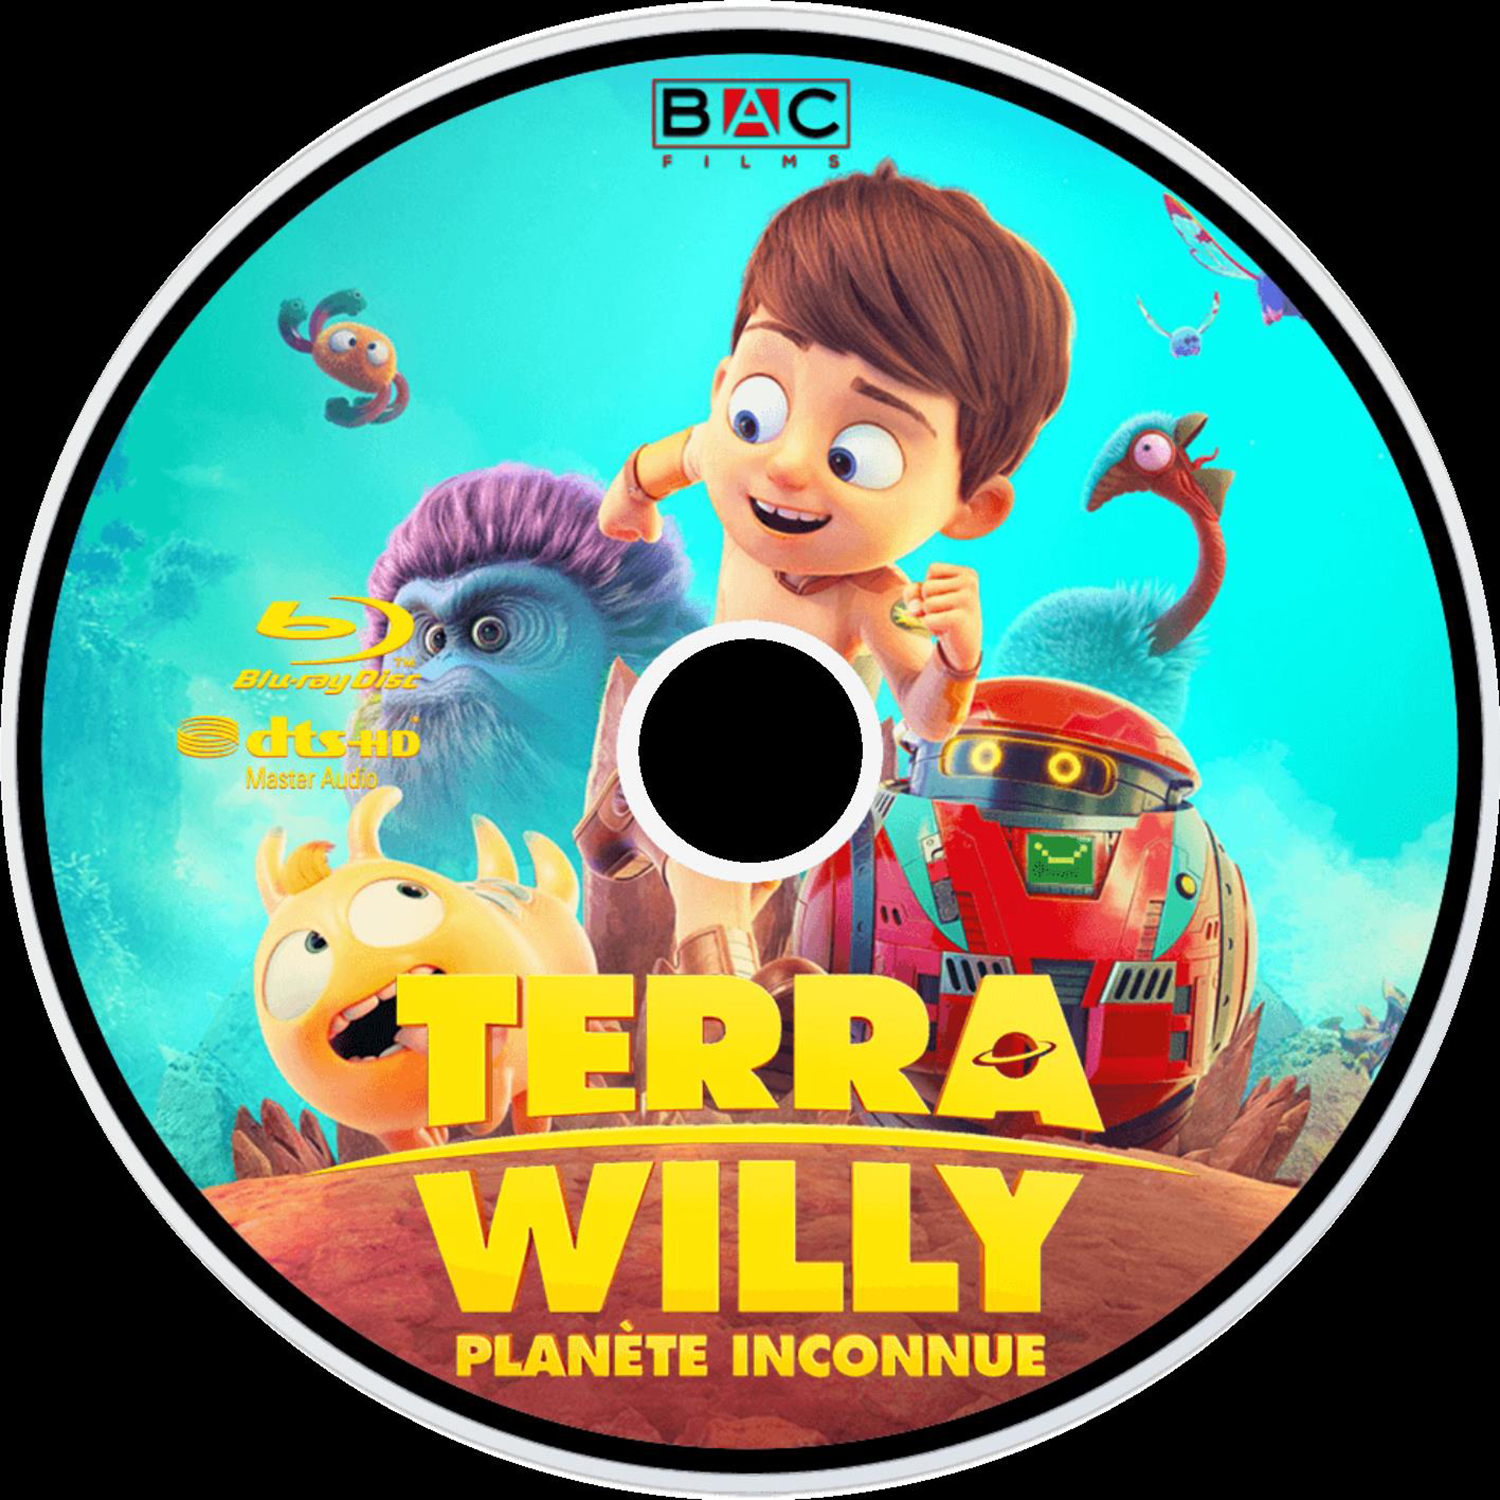 Terra Willy planete inconnue custom (BLU-RAY)